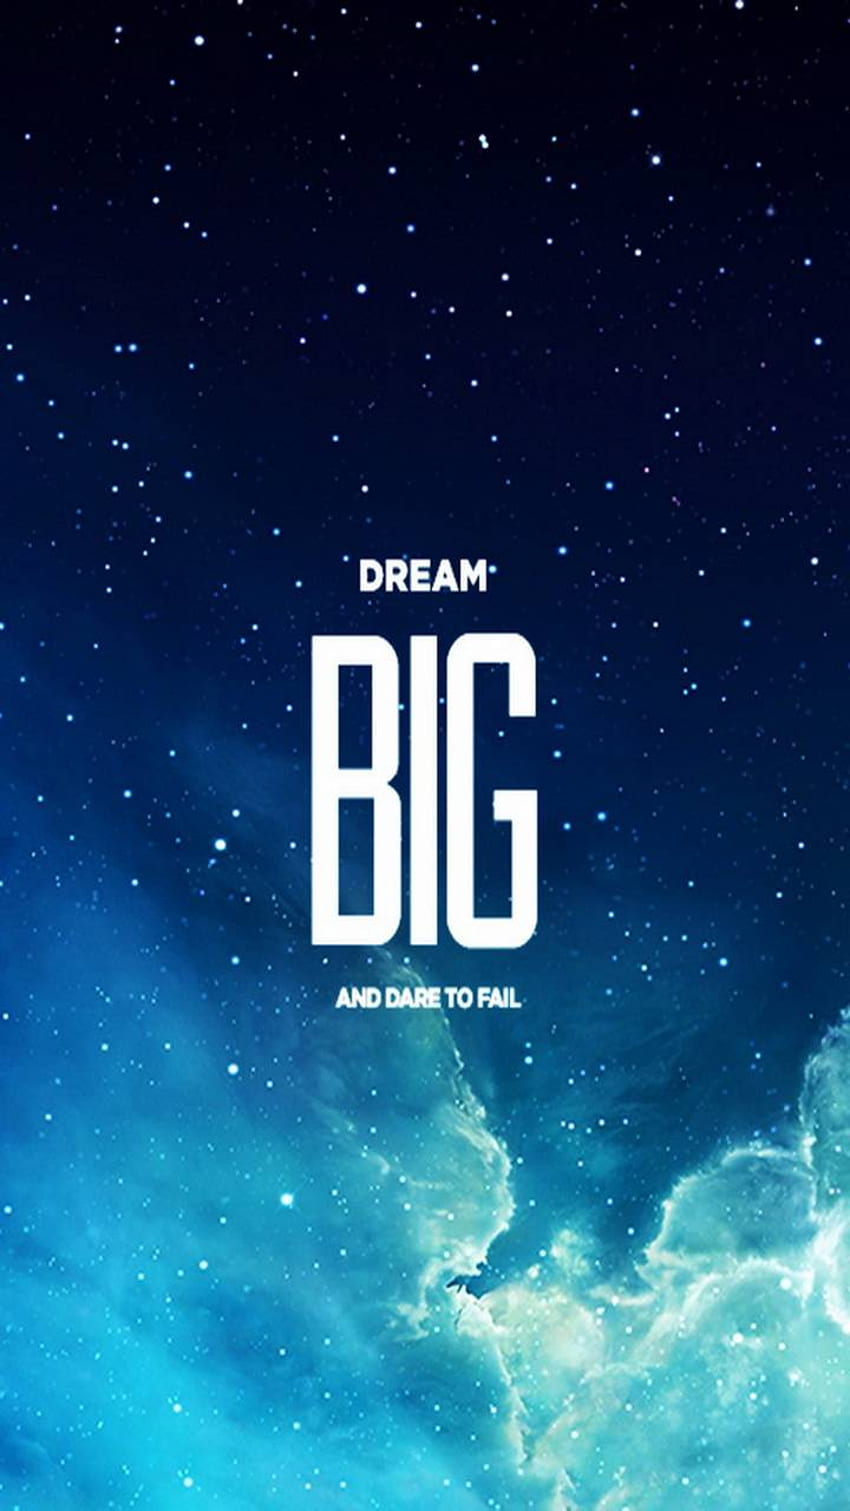 Big Dreams wallpaper by BeetleDee  Download on ZEDGE  ce9b